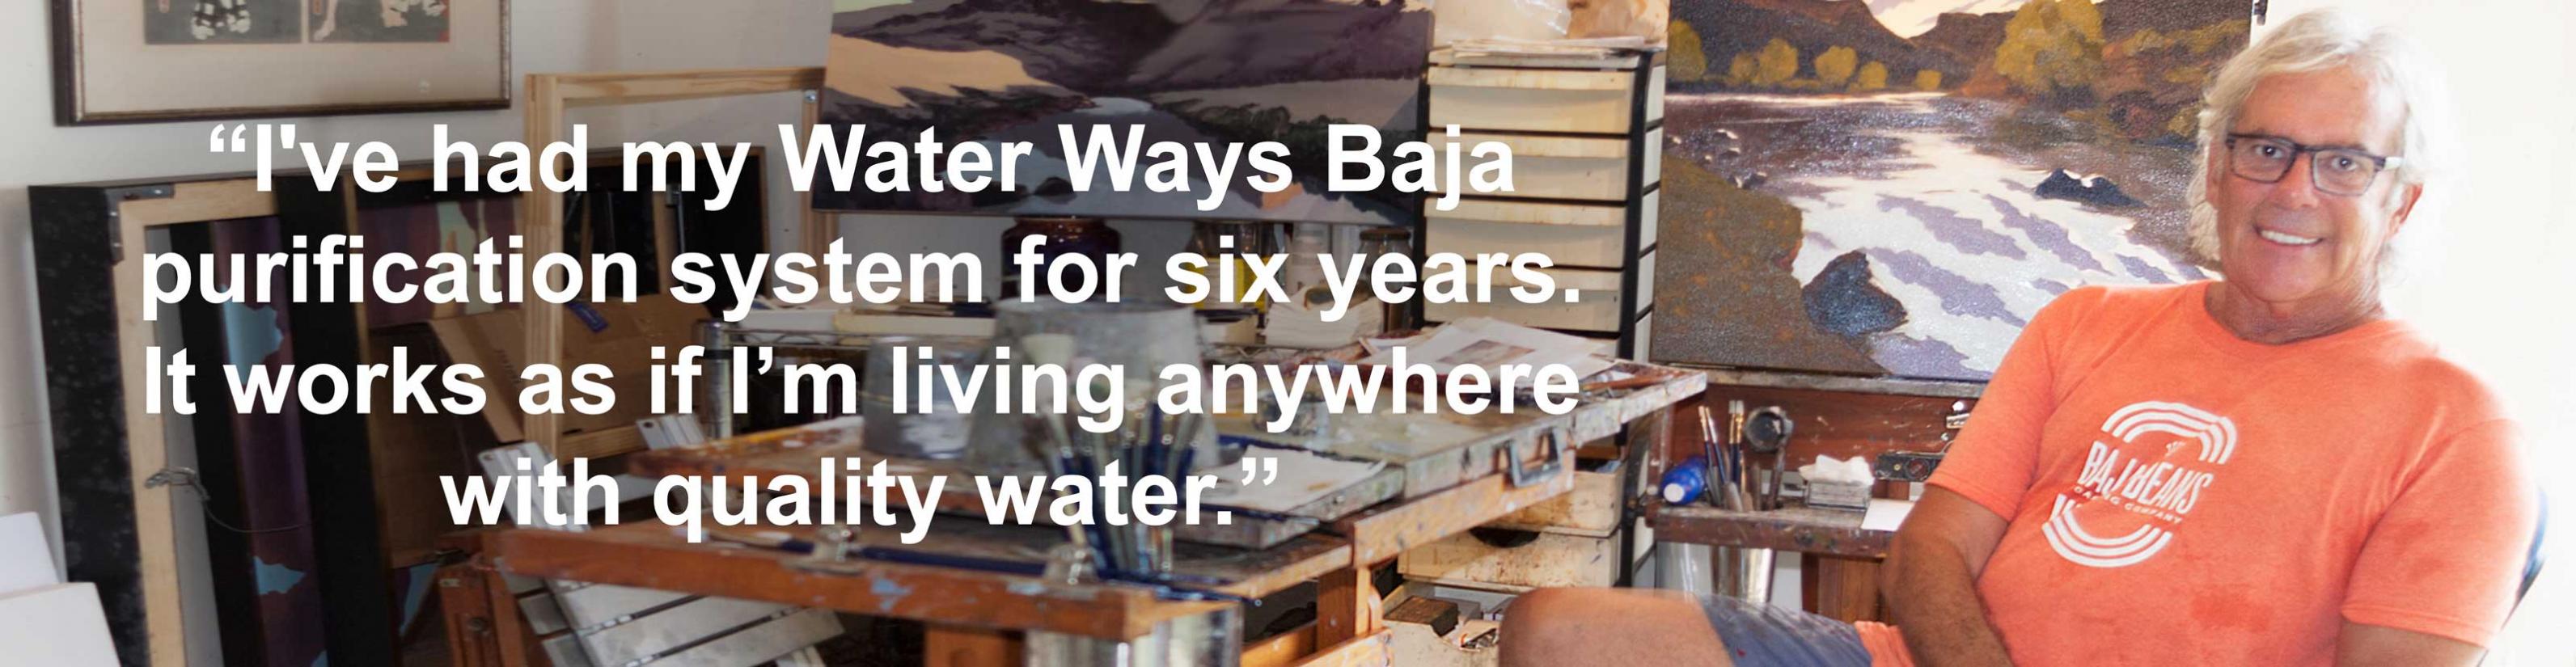 Happy Water Ways Baja Customers 